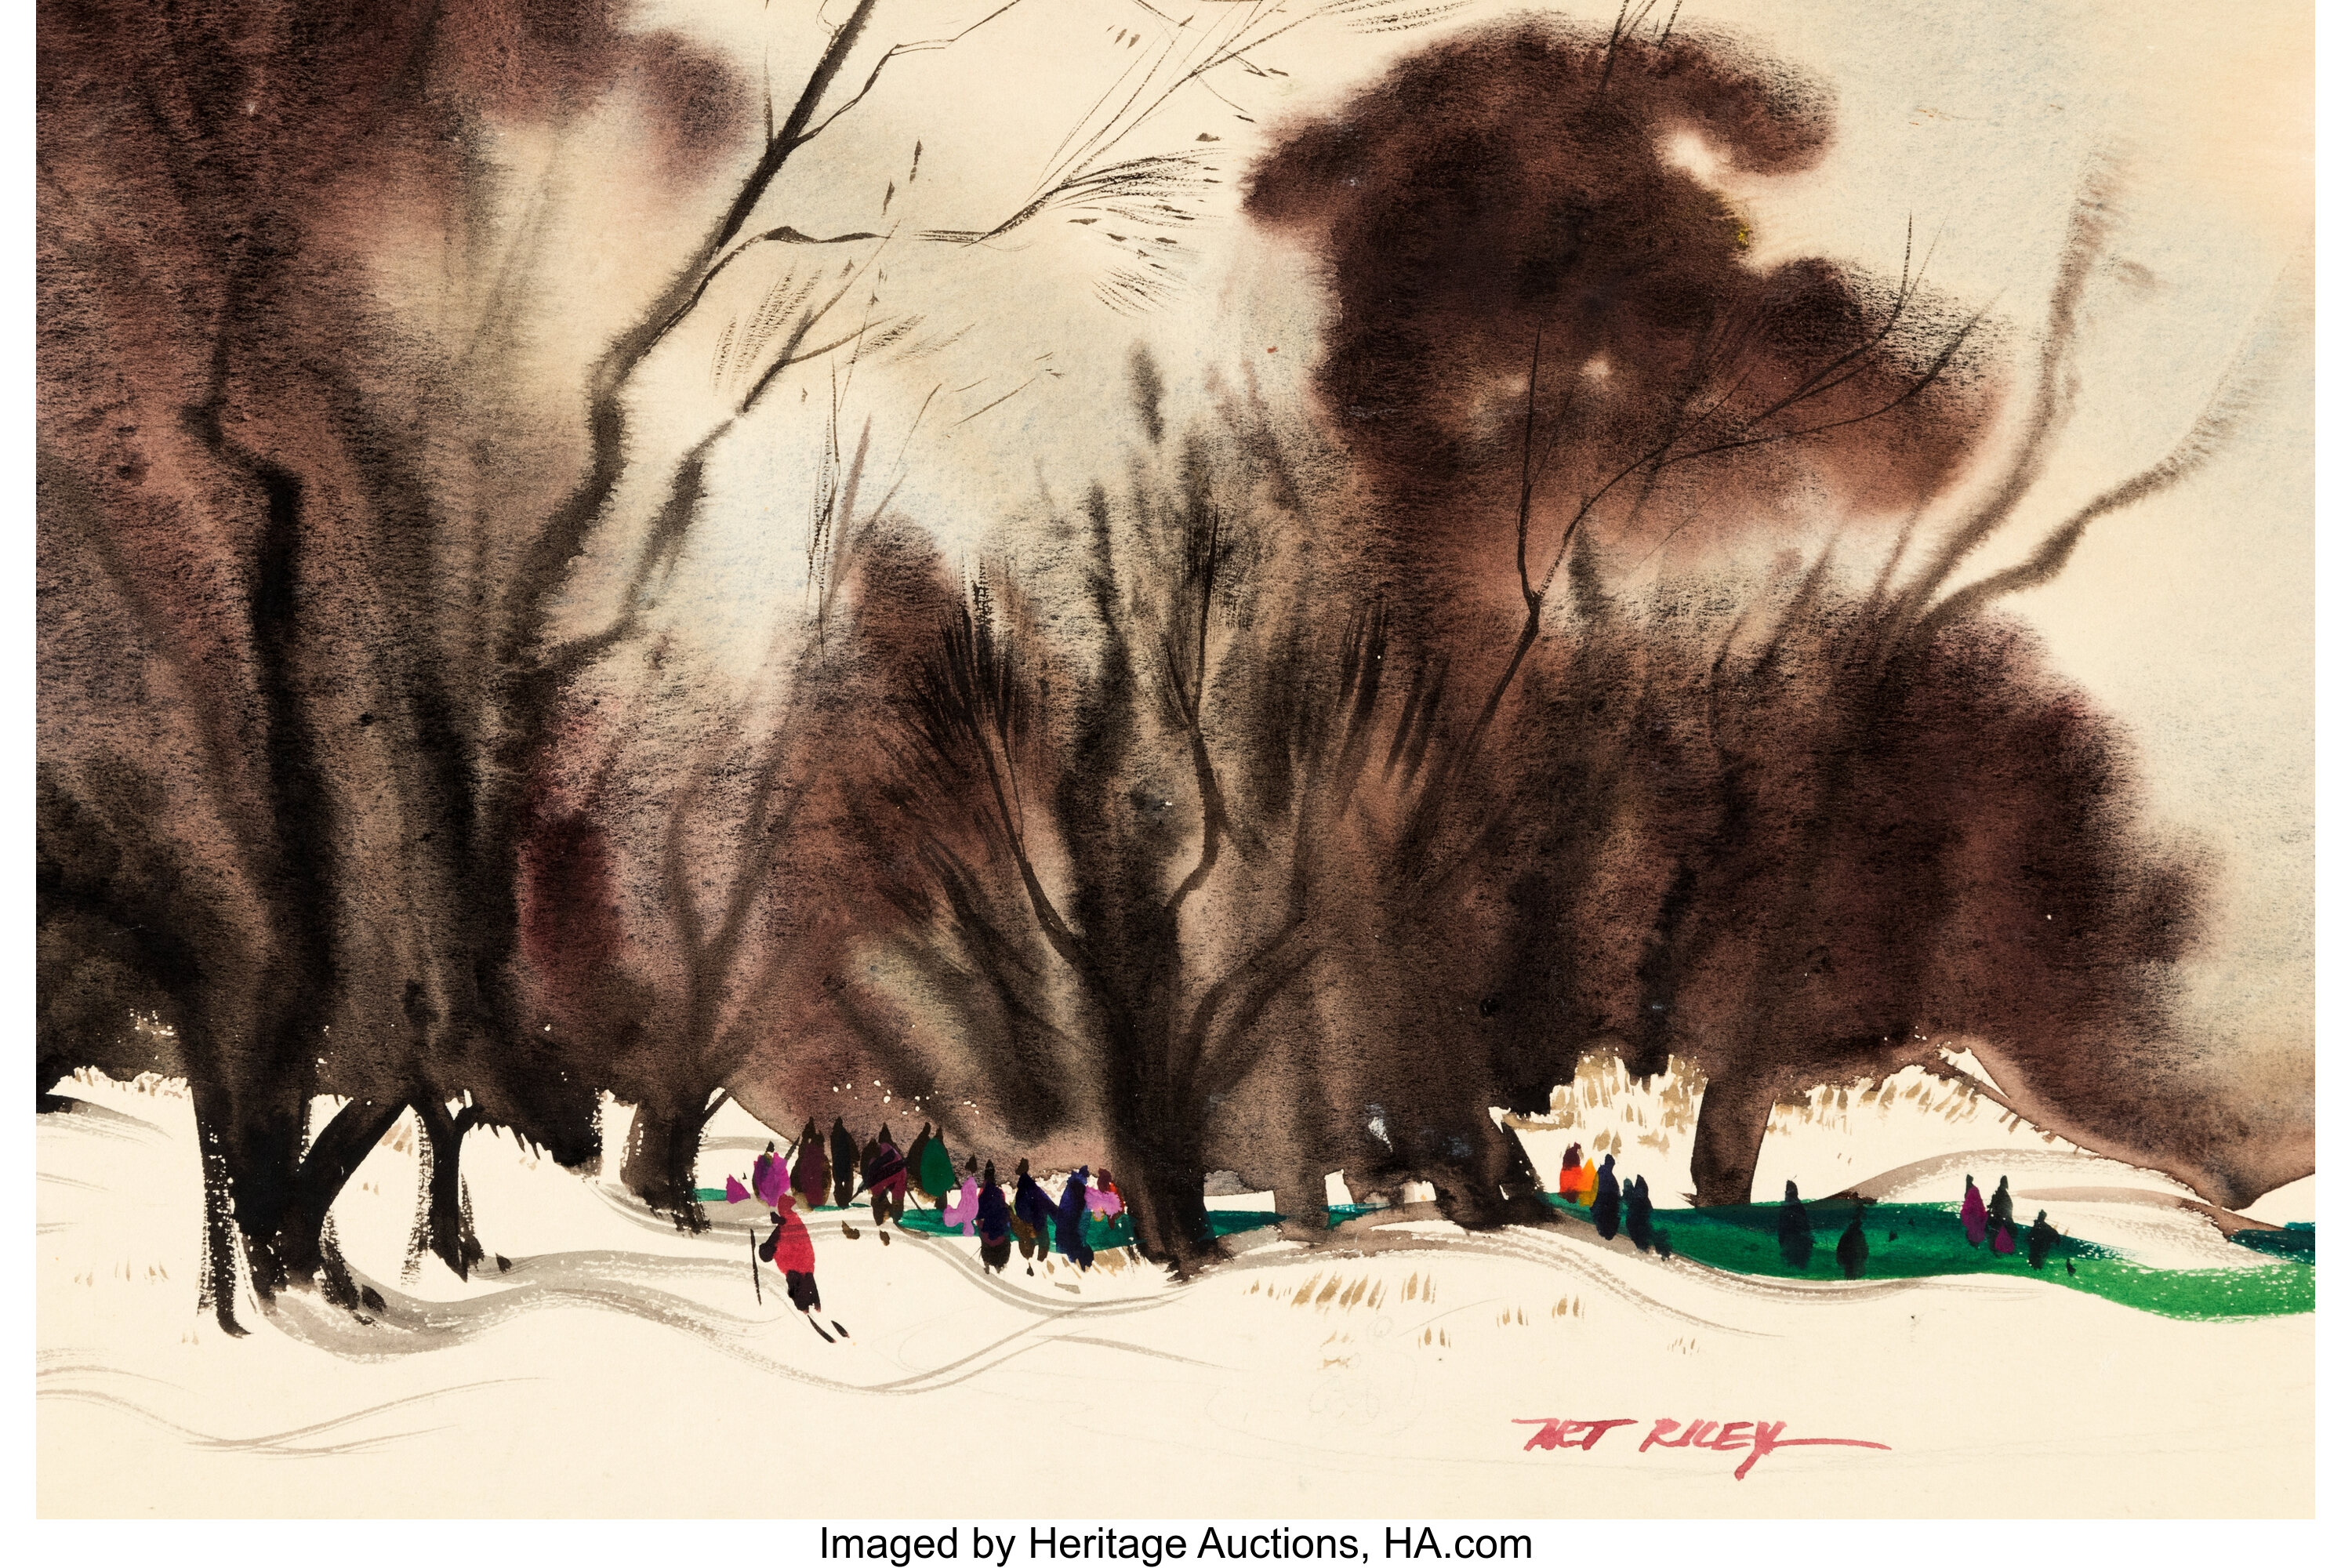 Art Riley "Winter Scene" Painting Original Art (Walt Disney, C. | Lot #99690 | Heritage Auctions